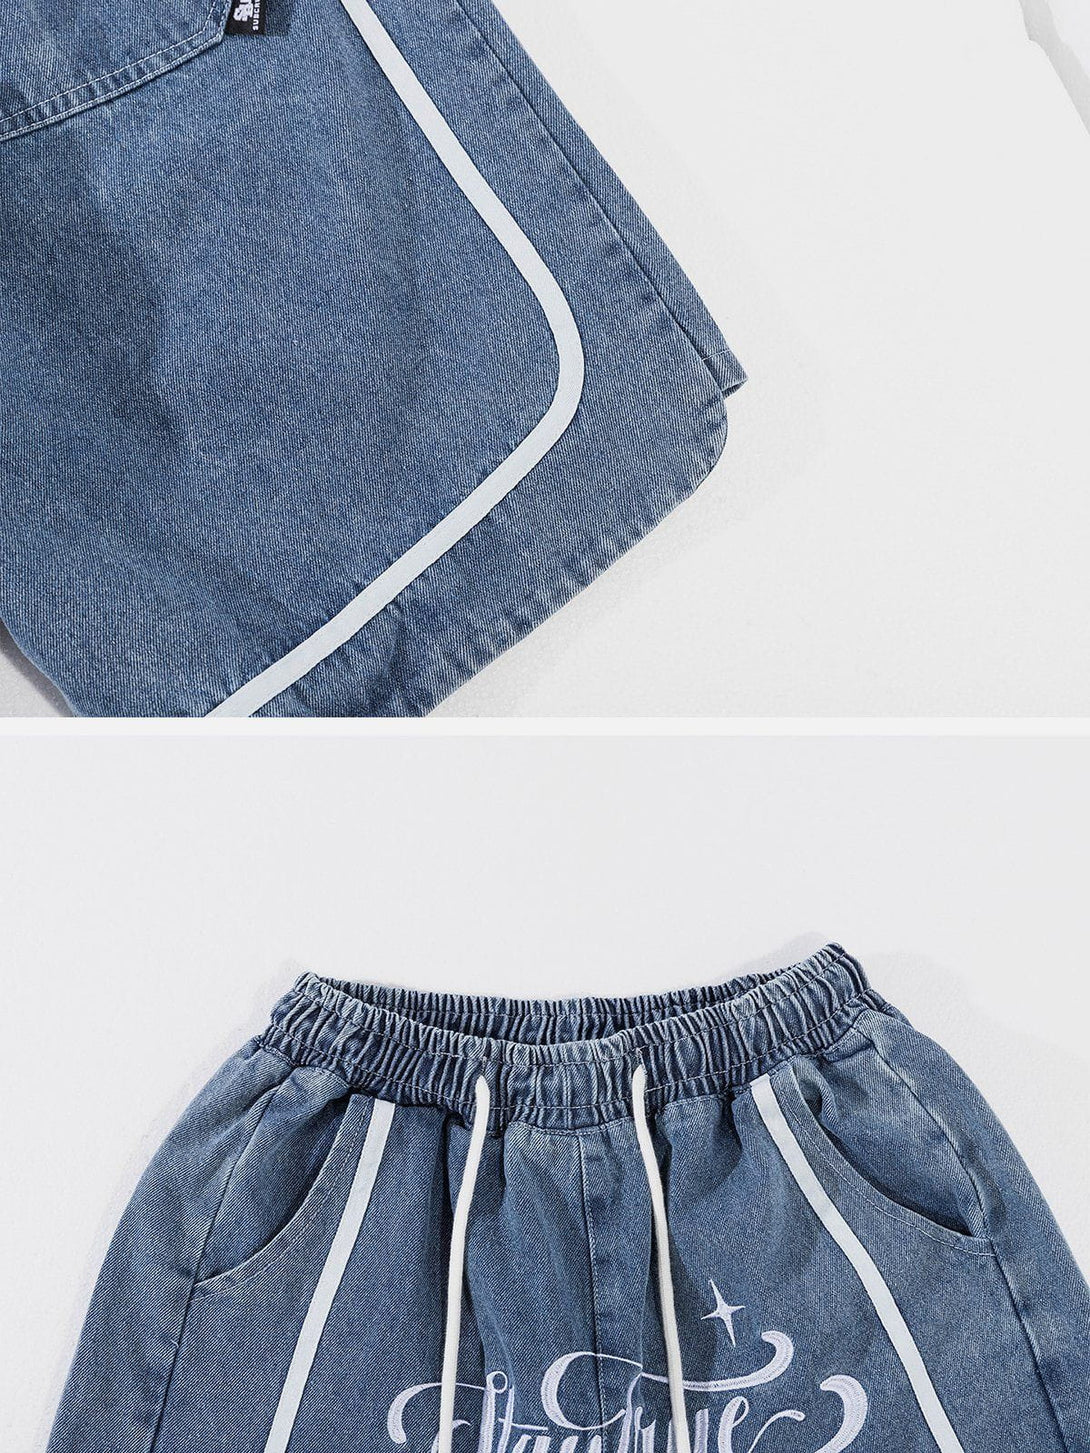 Majesda® - Patchwork Letter Denim Shorts outfit ideas streetwear fashion